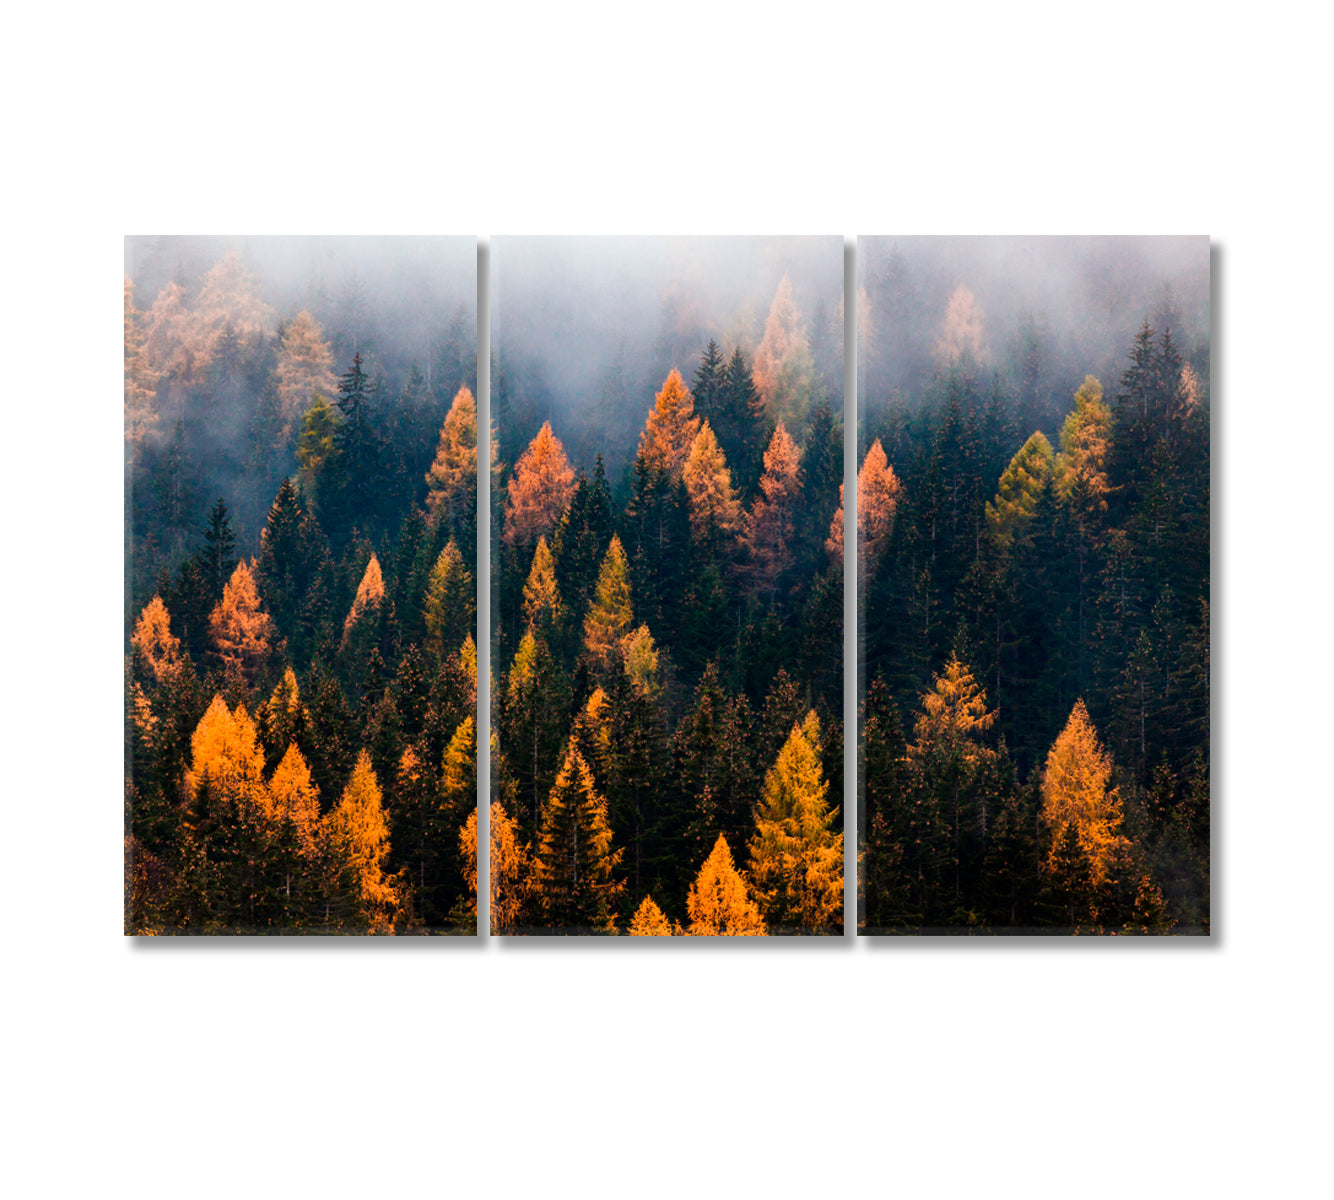 Autumn Forest in Fog Canvas Print-Canvas Print-CetArt-3 Panels-36x24 inches-CetArt